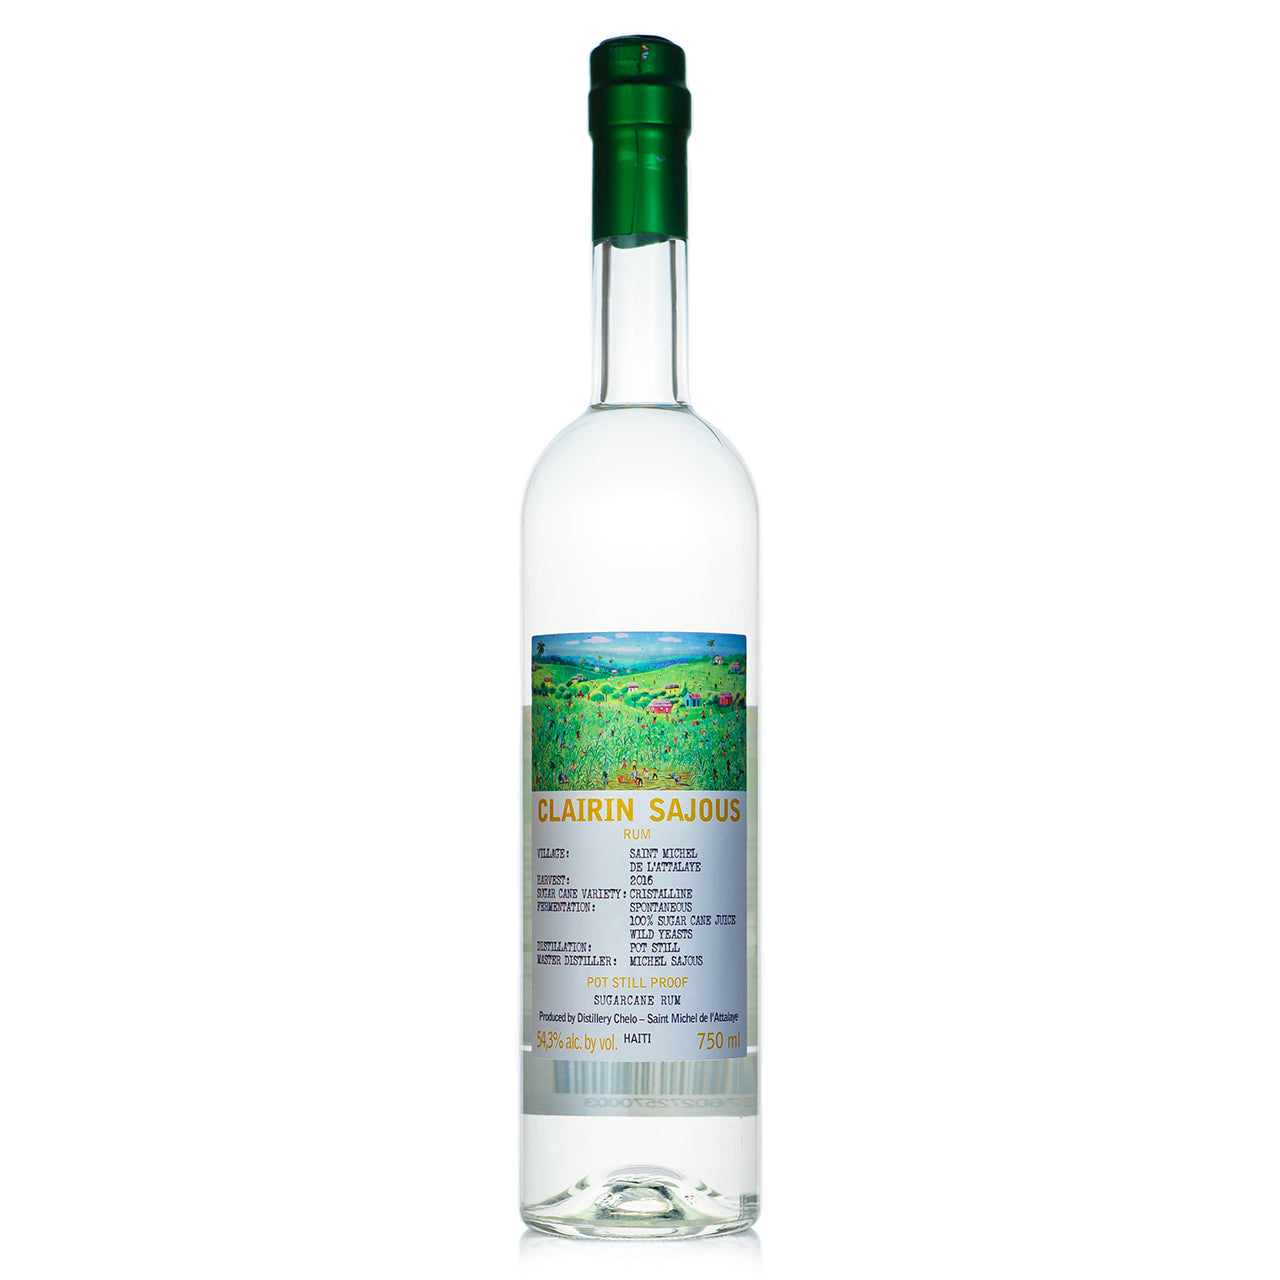 Clairin Sajous 'Distillery Chelo' Haitian Rum